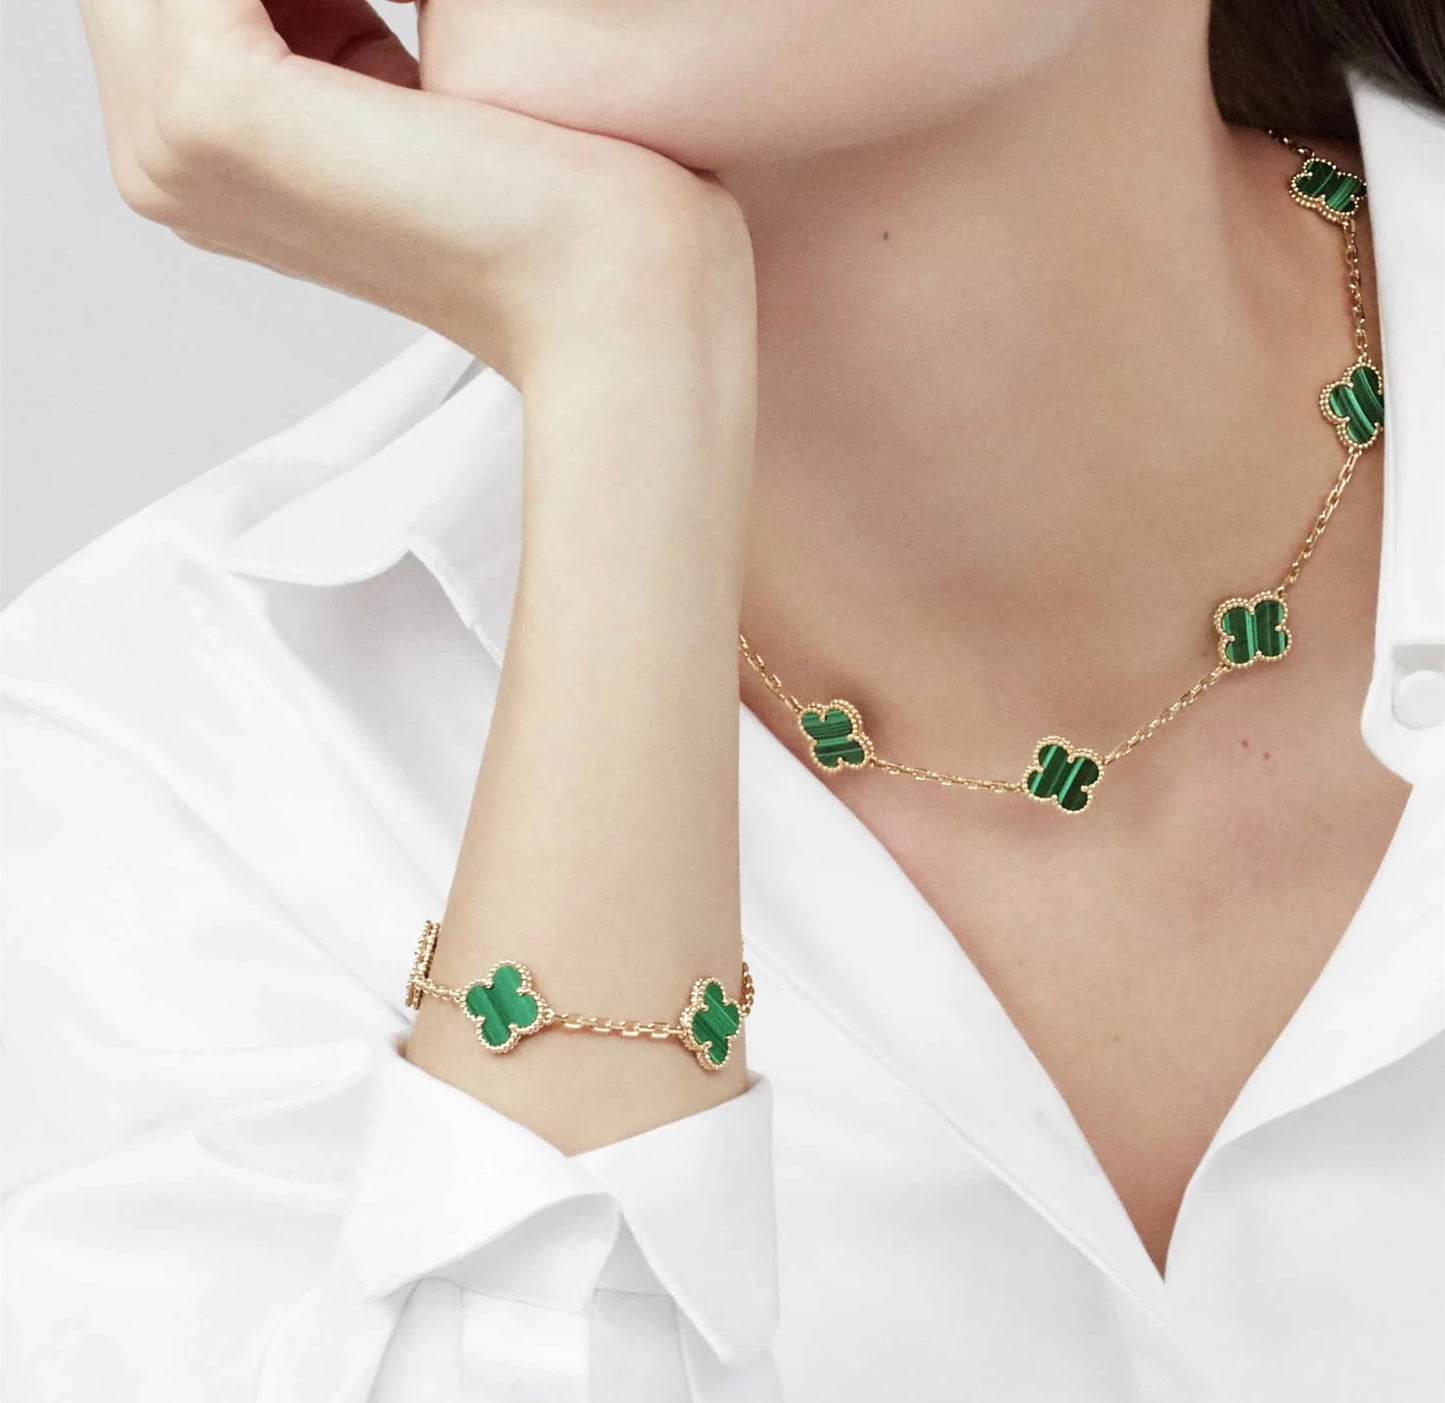 10K Green Clover Necklace